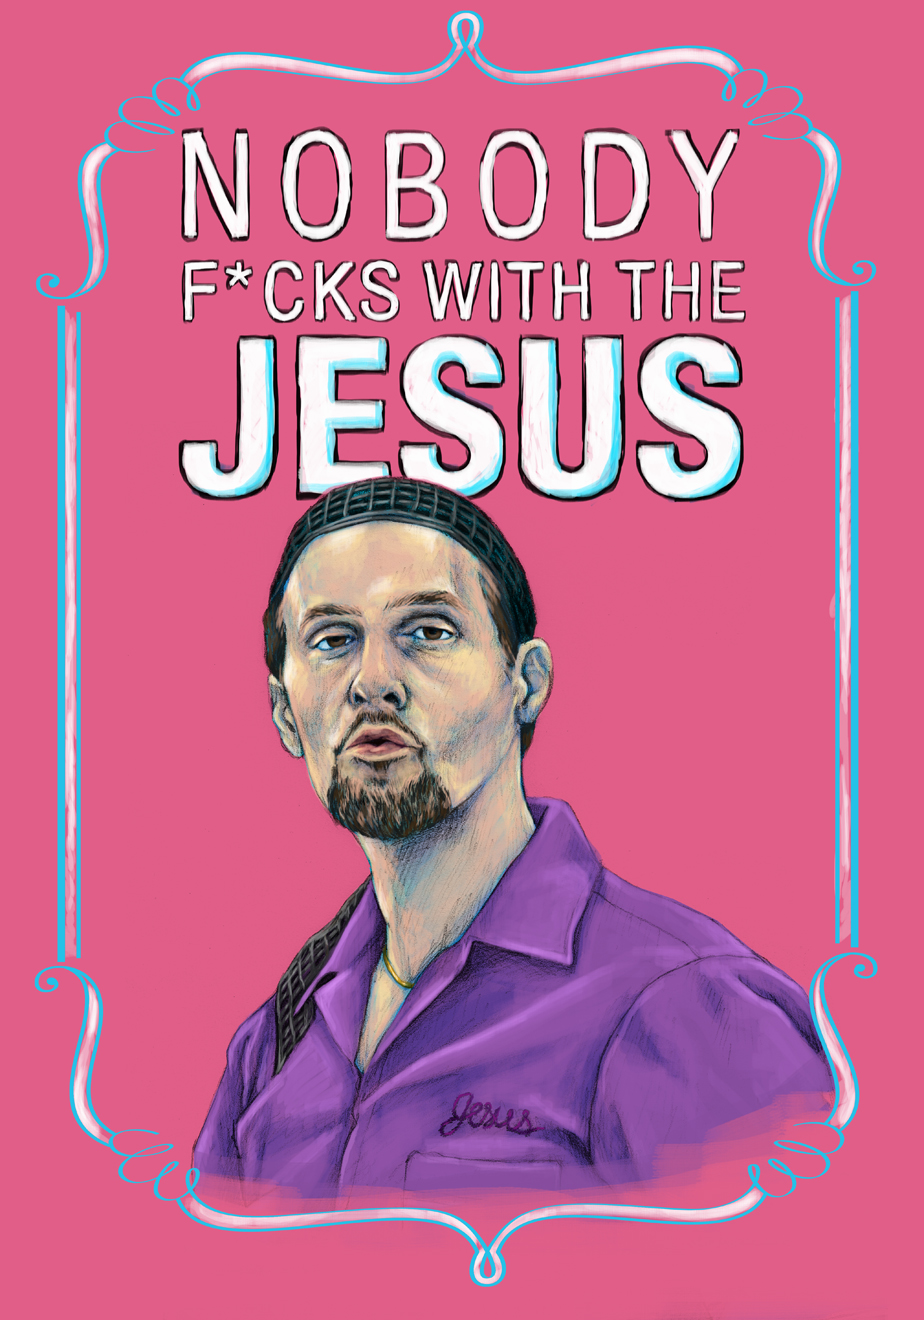  "Nobody f*cks with the Jesus" Jesus Quintana from The Big Lebowski 